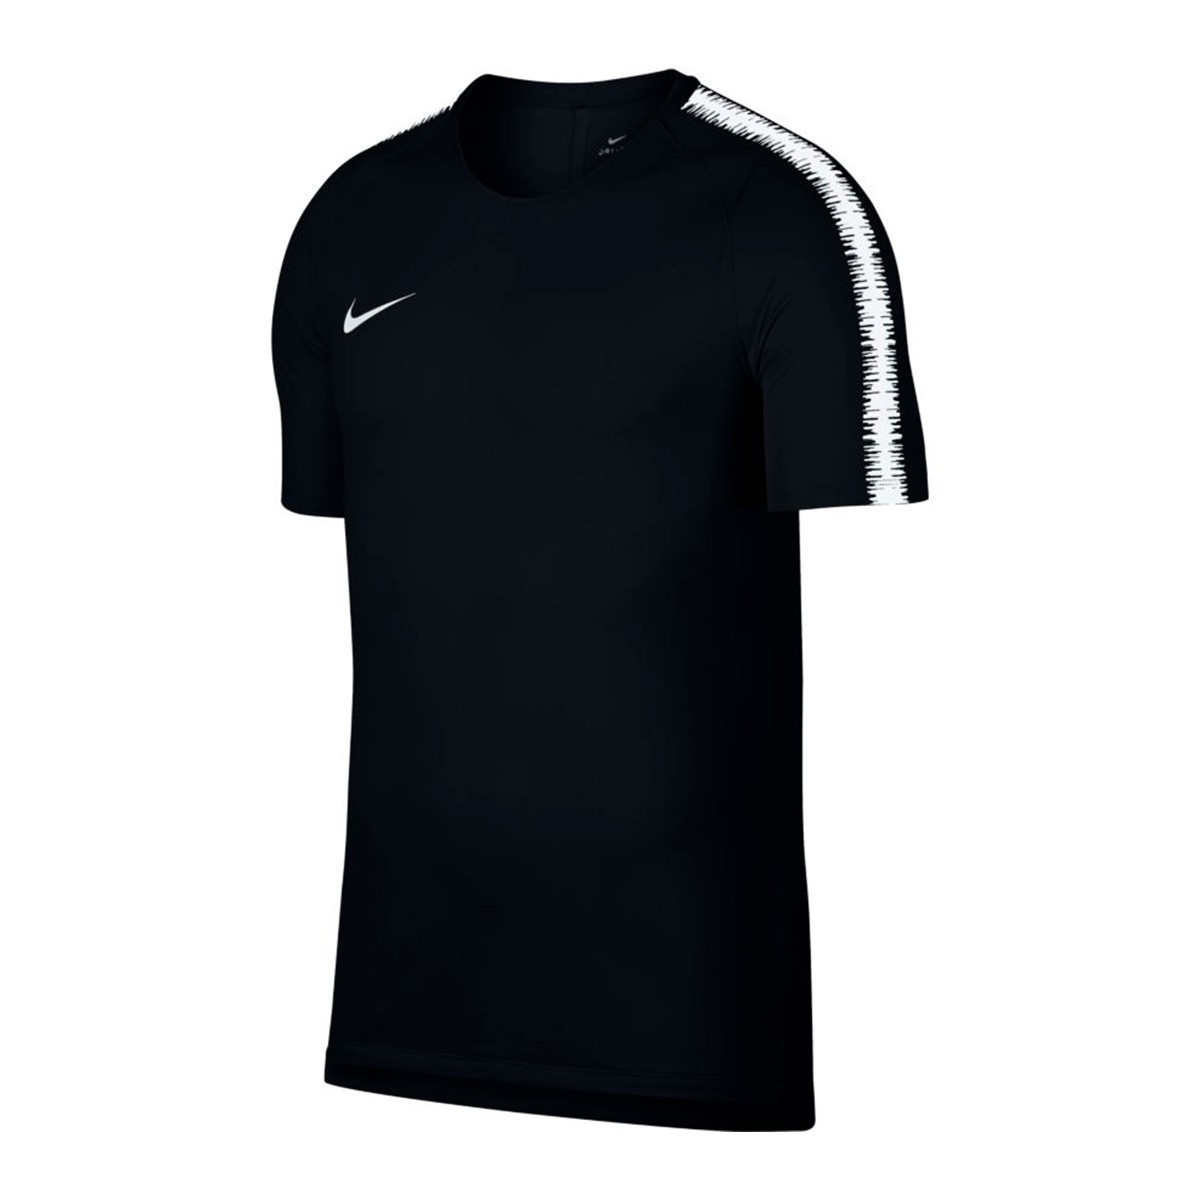 Jersey Nike Breathe Squad Black-White - Football store Fútbol Emotion